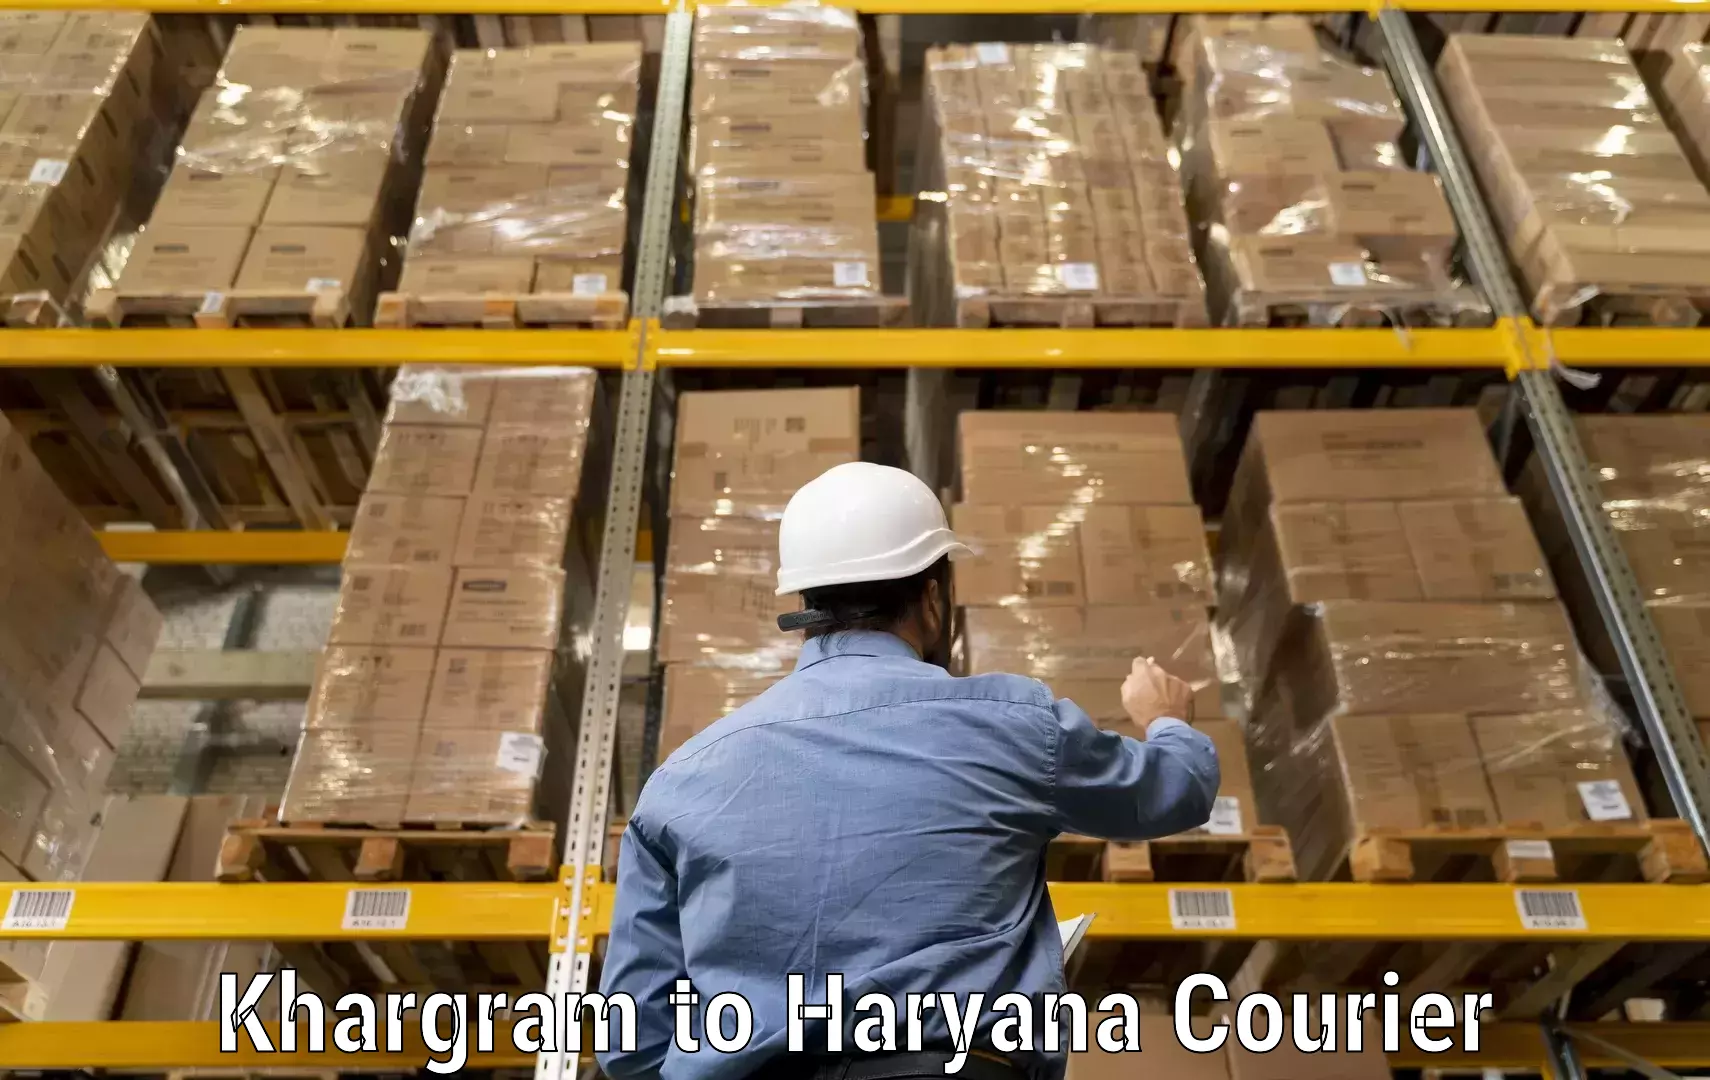 Cargo delivery service Khargram to Gurgaon